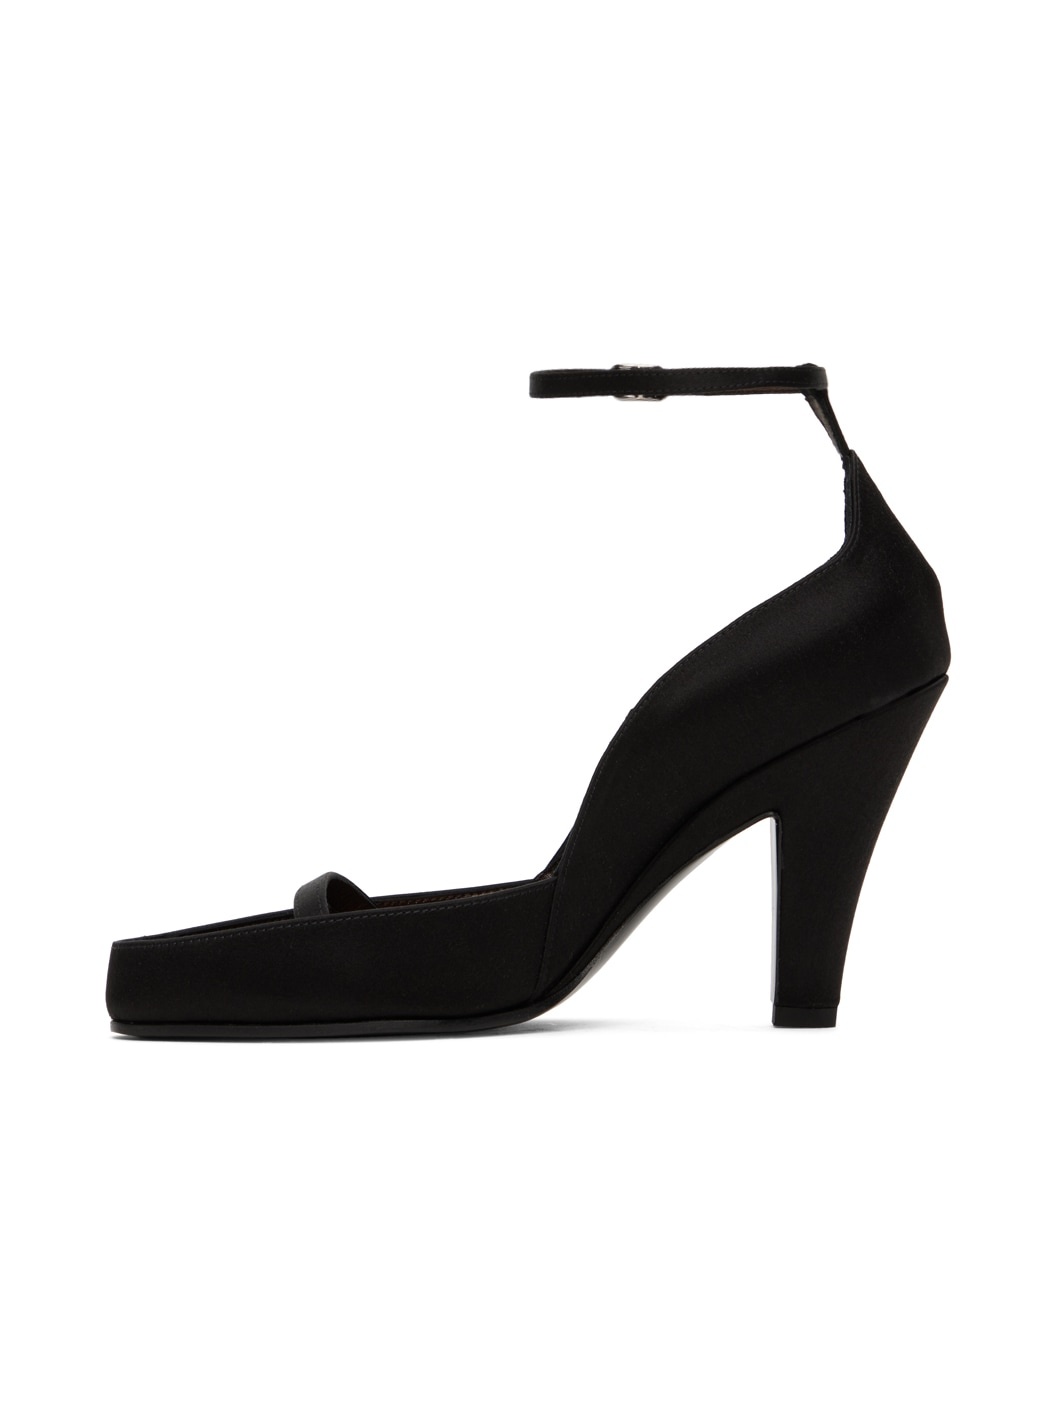 Black Ankle Strap Heels - 3